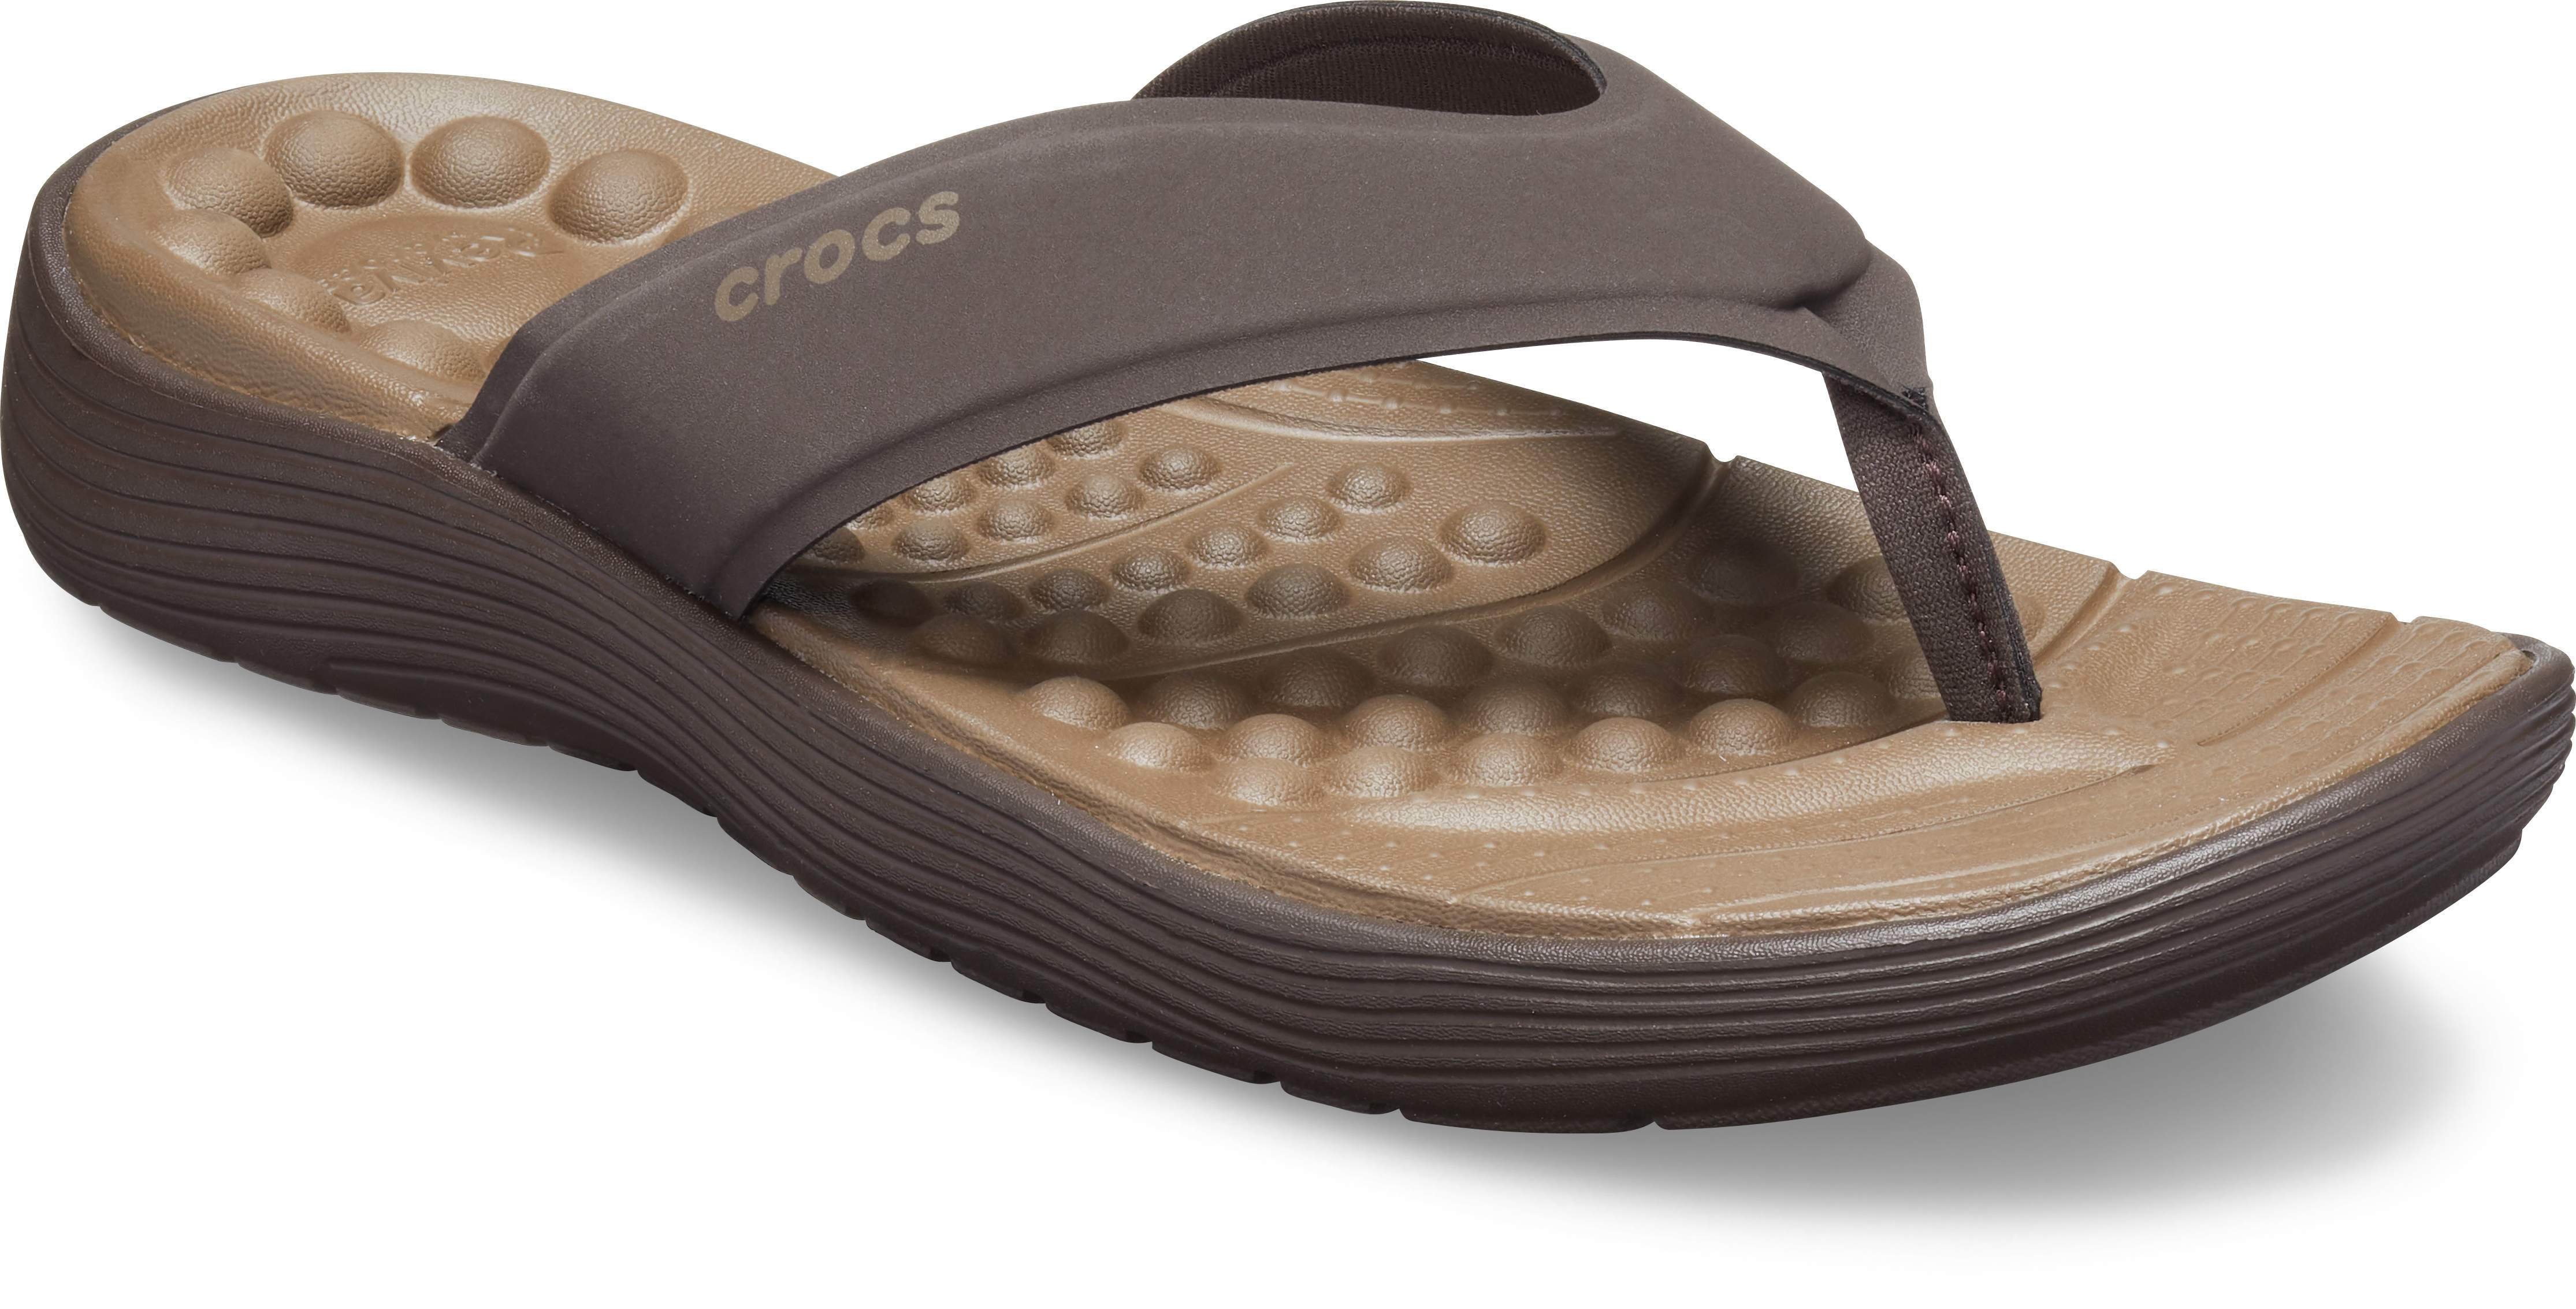 crocs reviva shoes